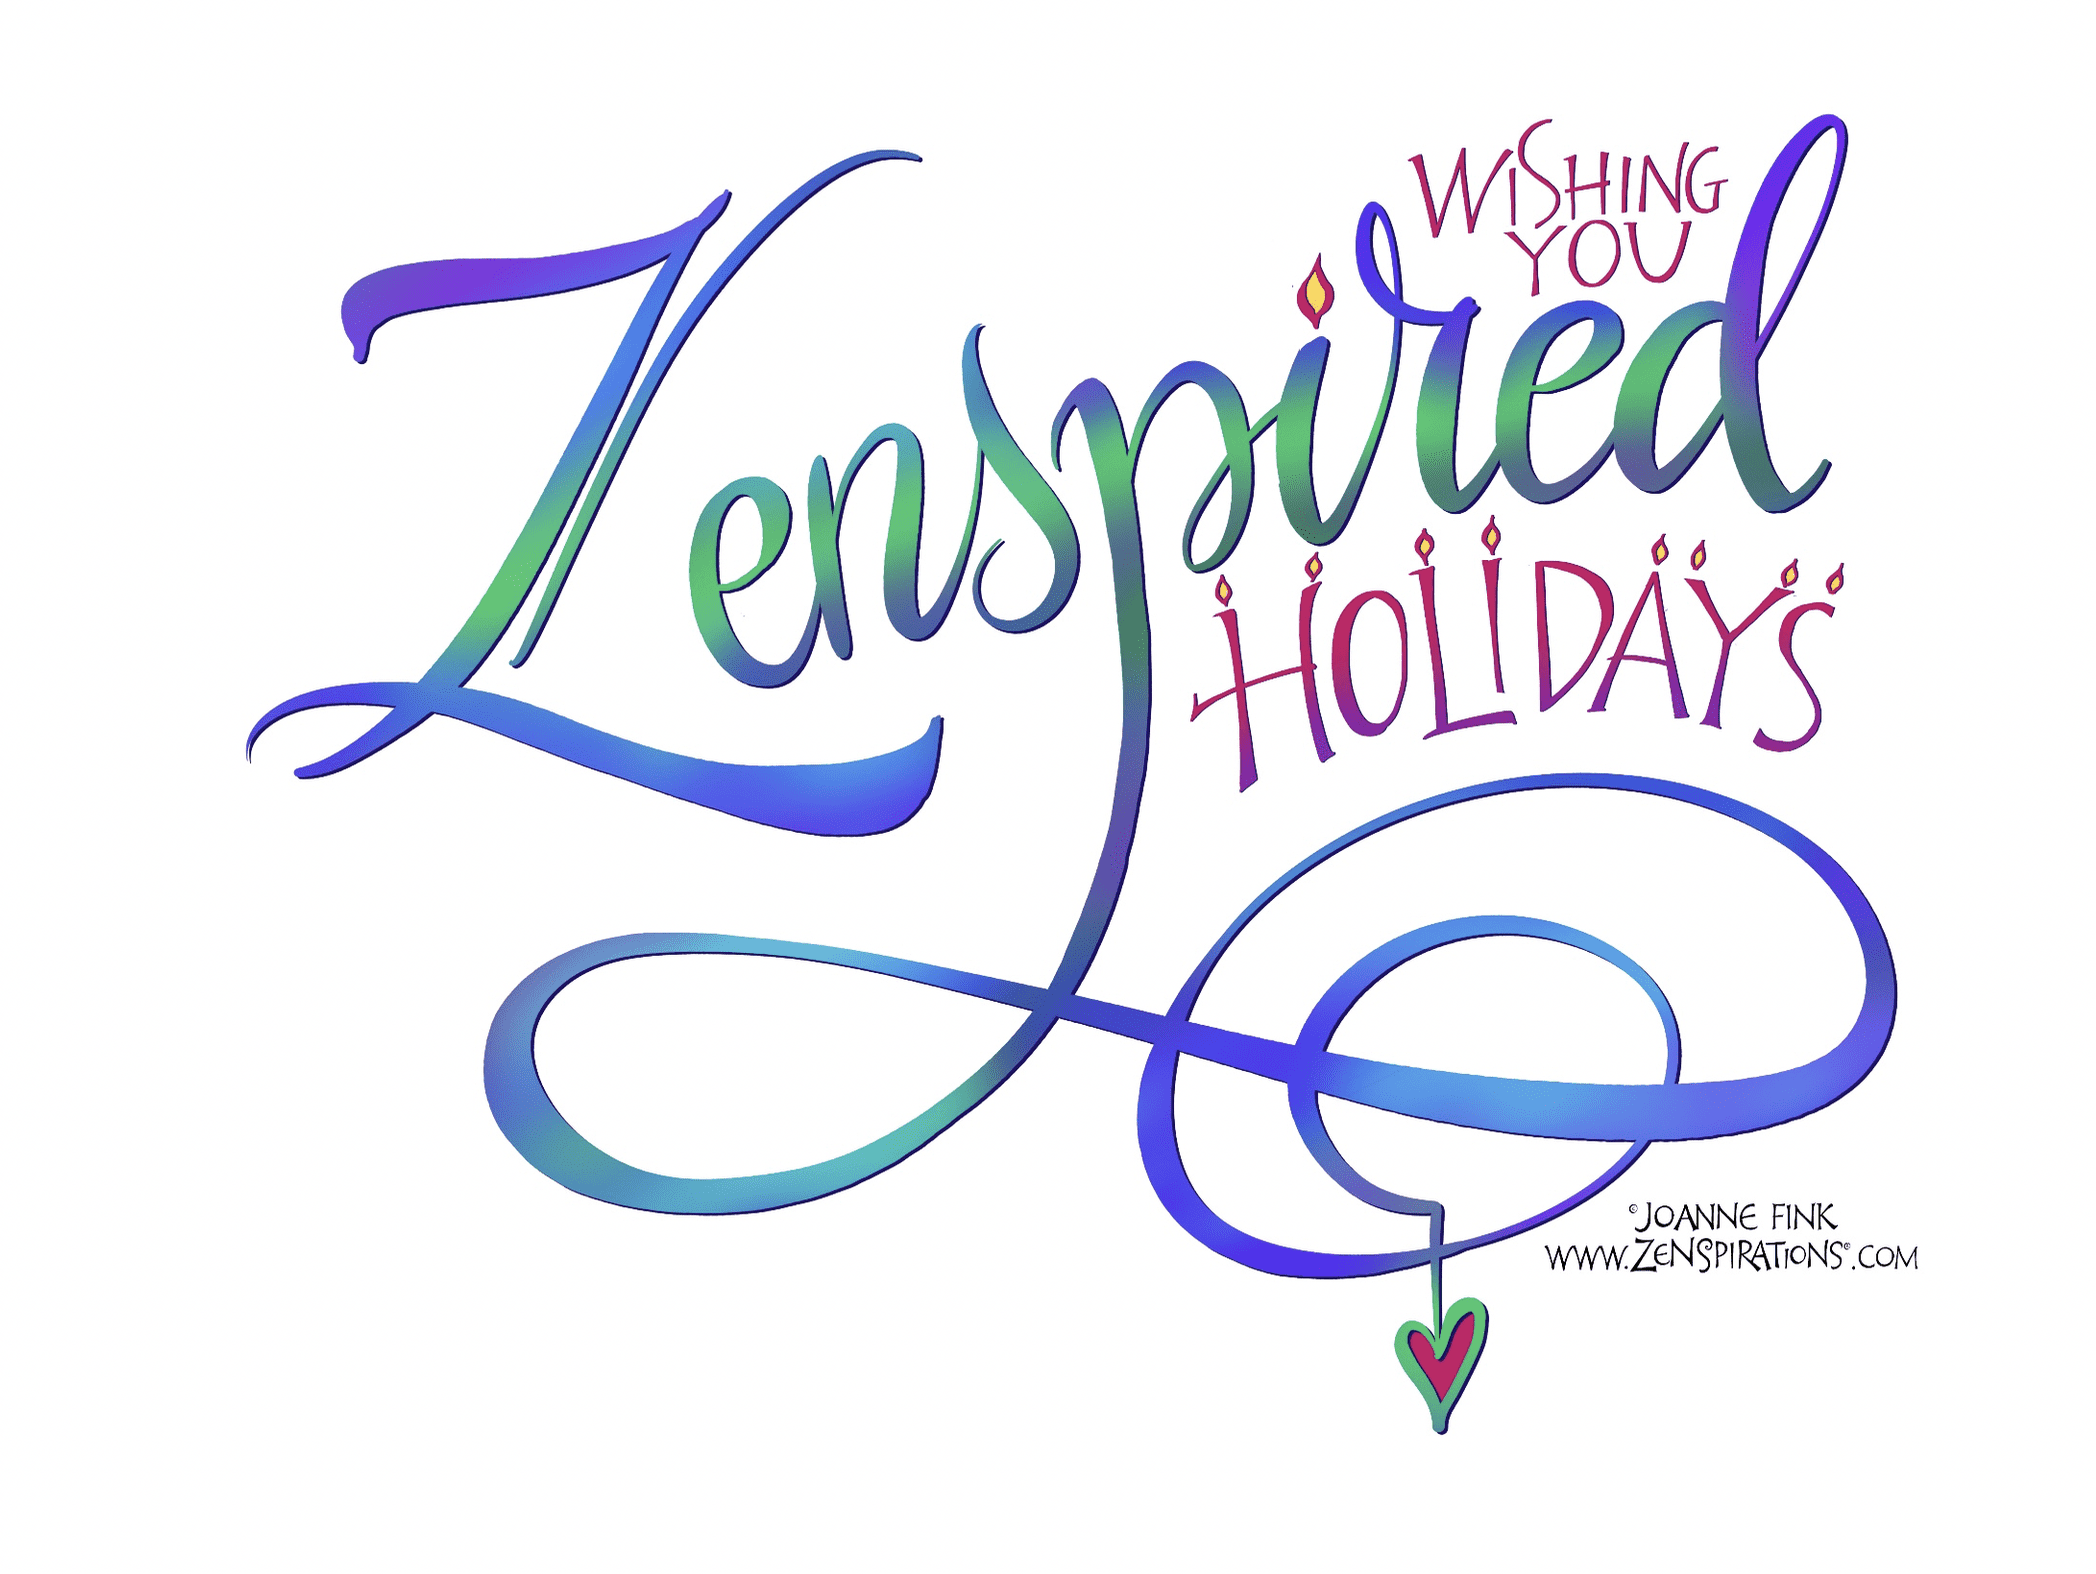 zenspirations_by_joanne_fink_blog_12_26_2016_zenspired_holidays